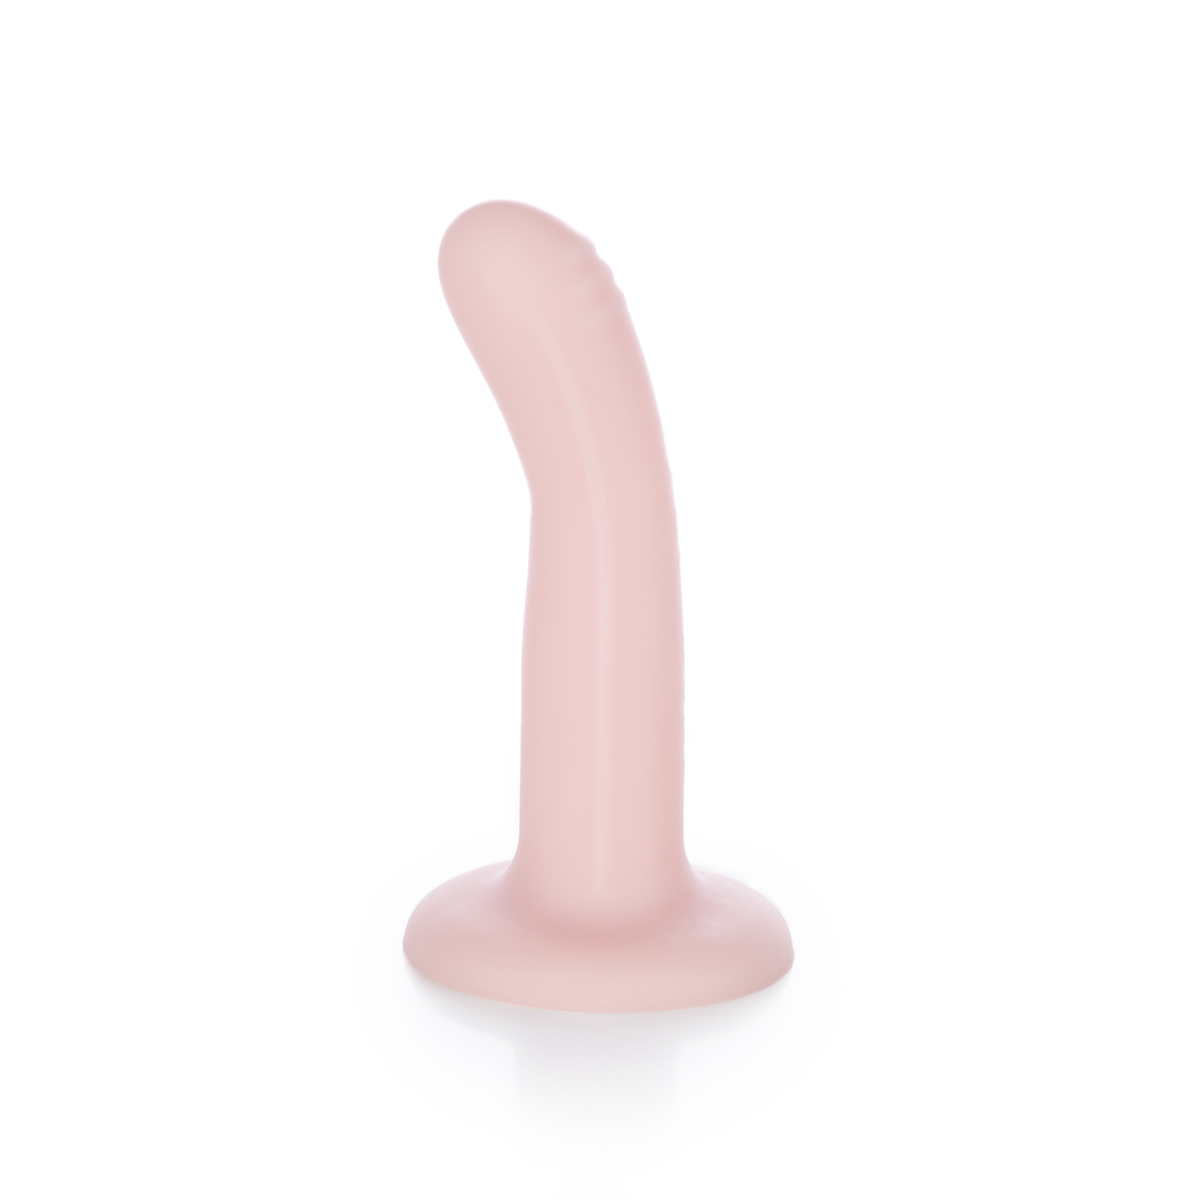 Small Strap On Dildo Desire Pink 6.6 inch